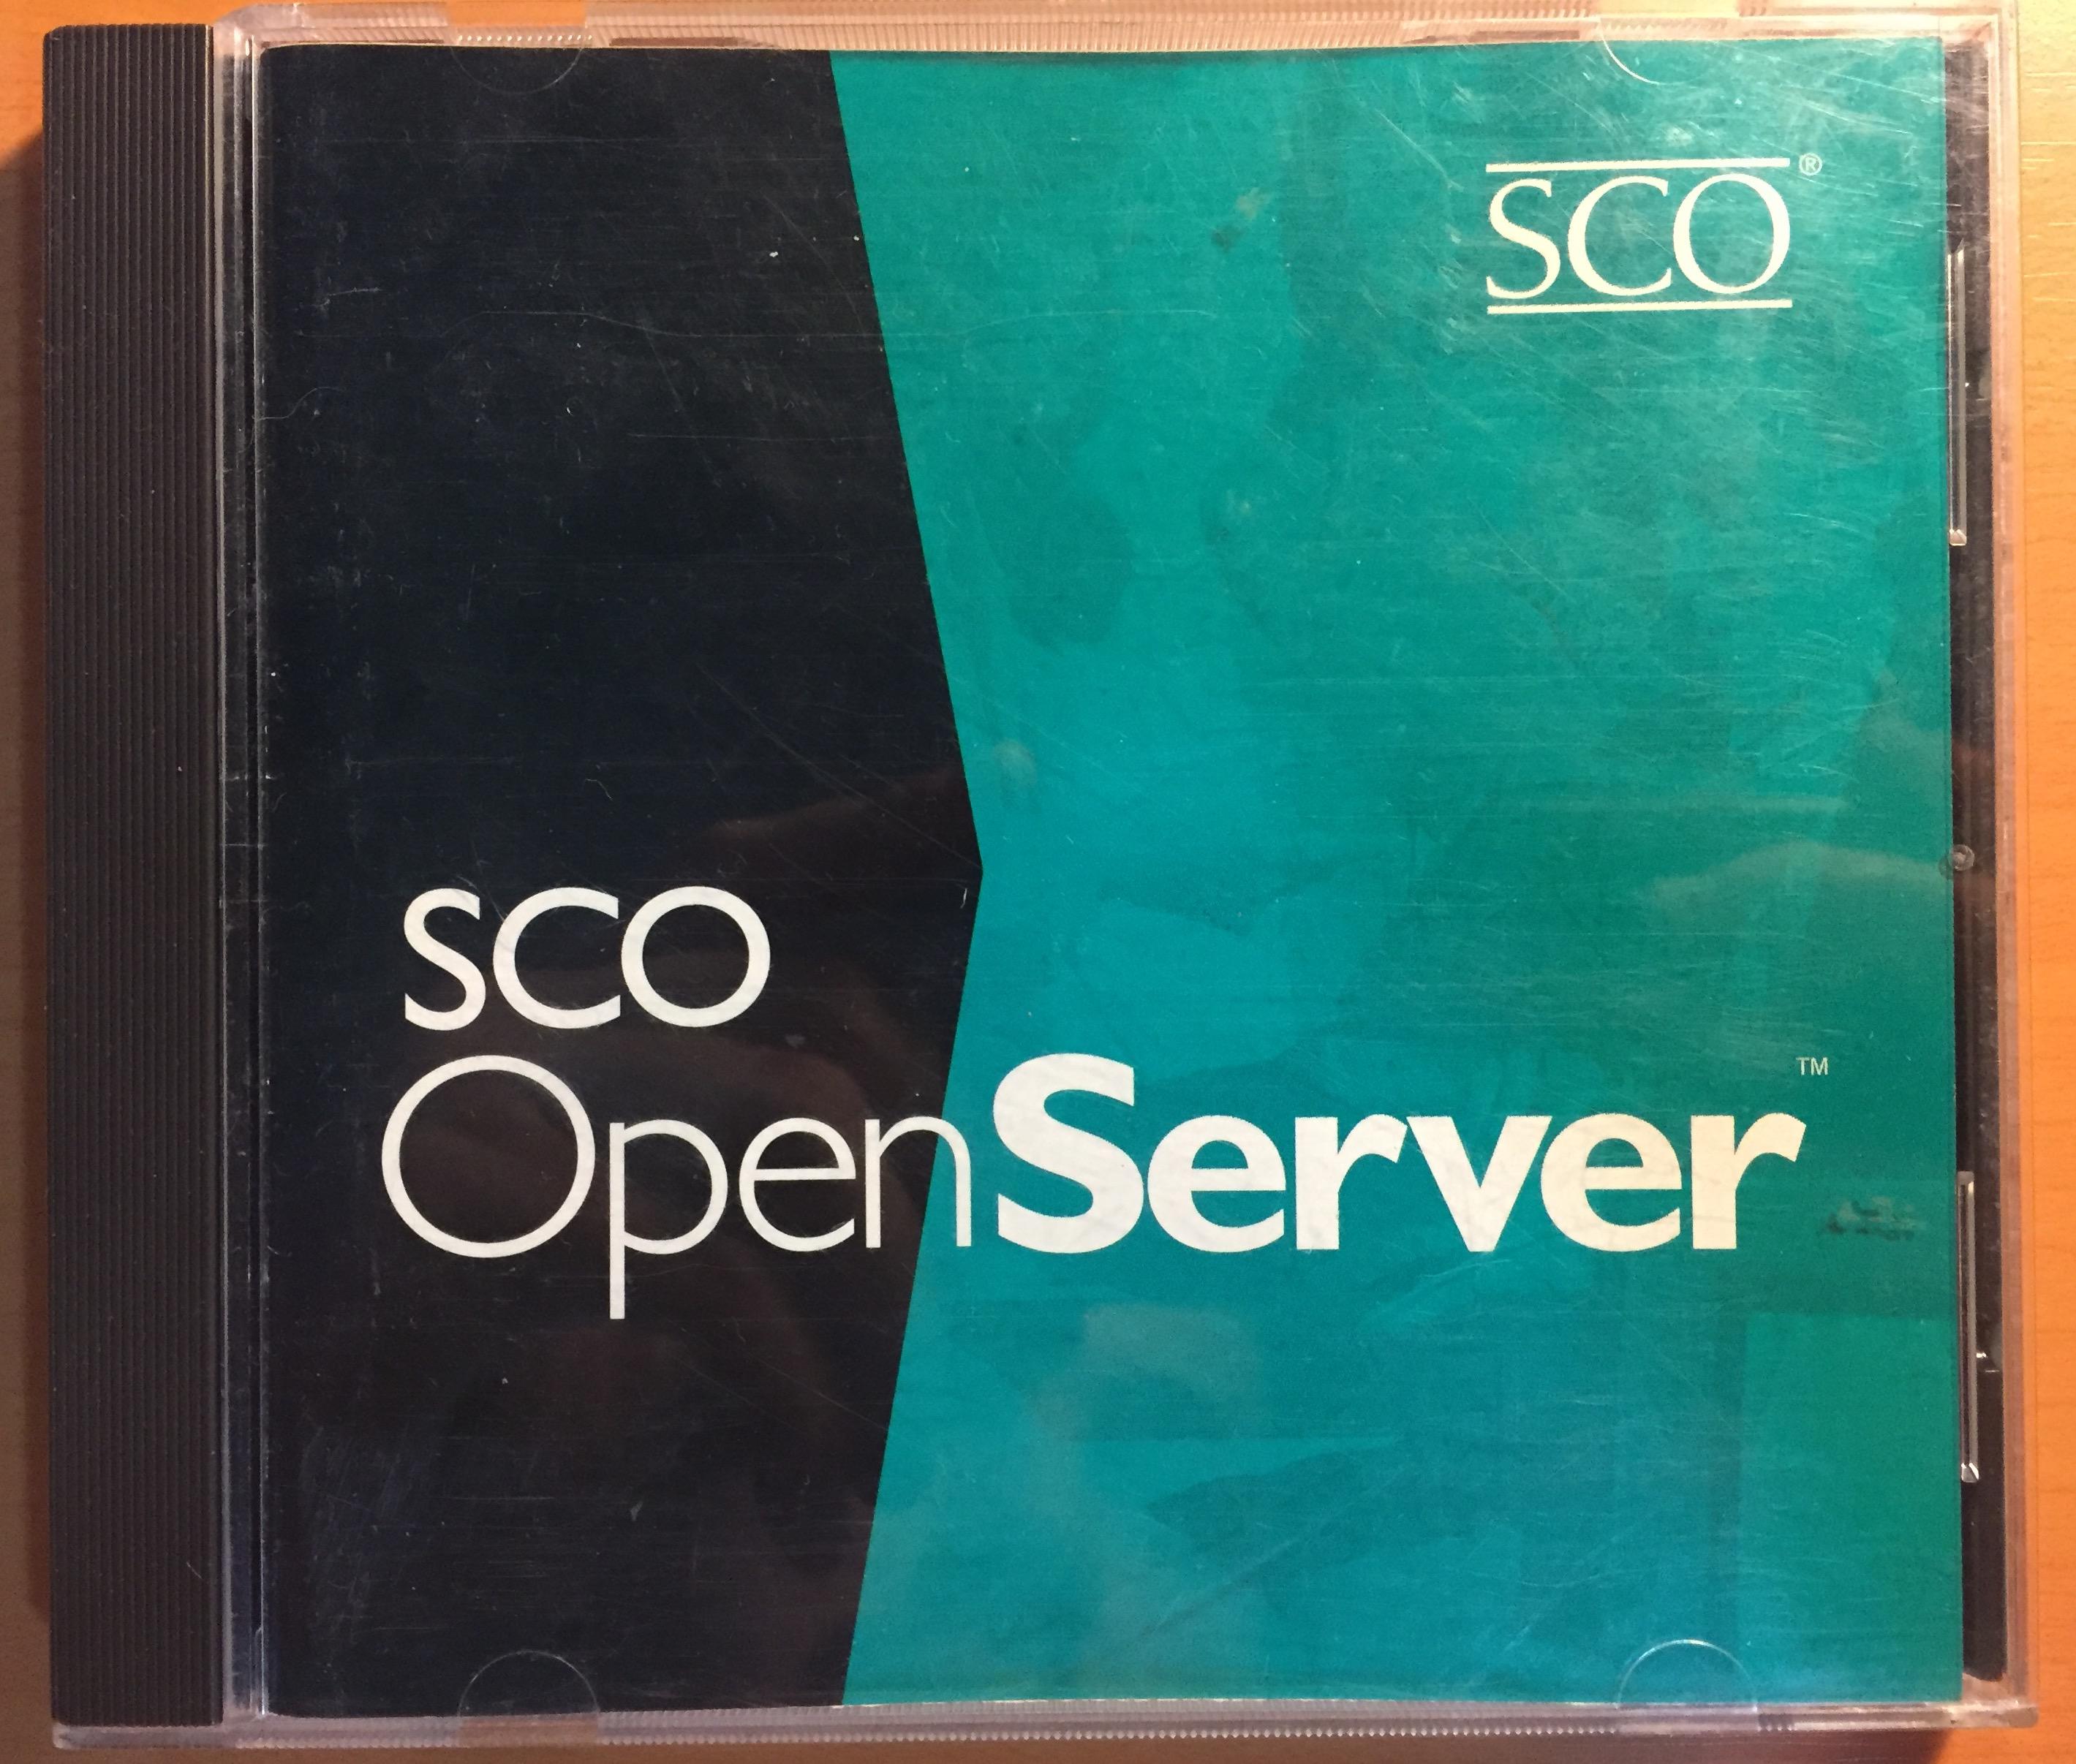 View topic - SCO OpenServer (1995) - BetaArchive
